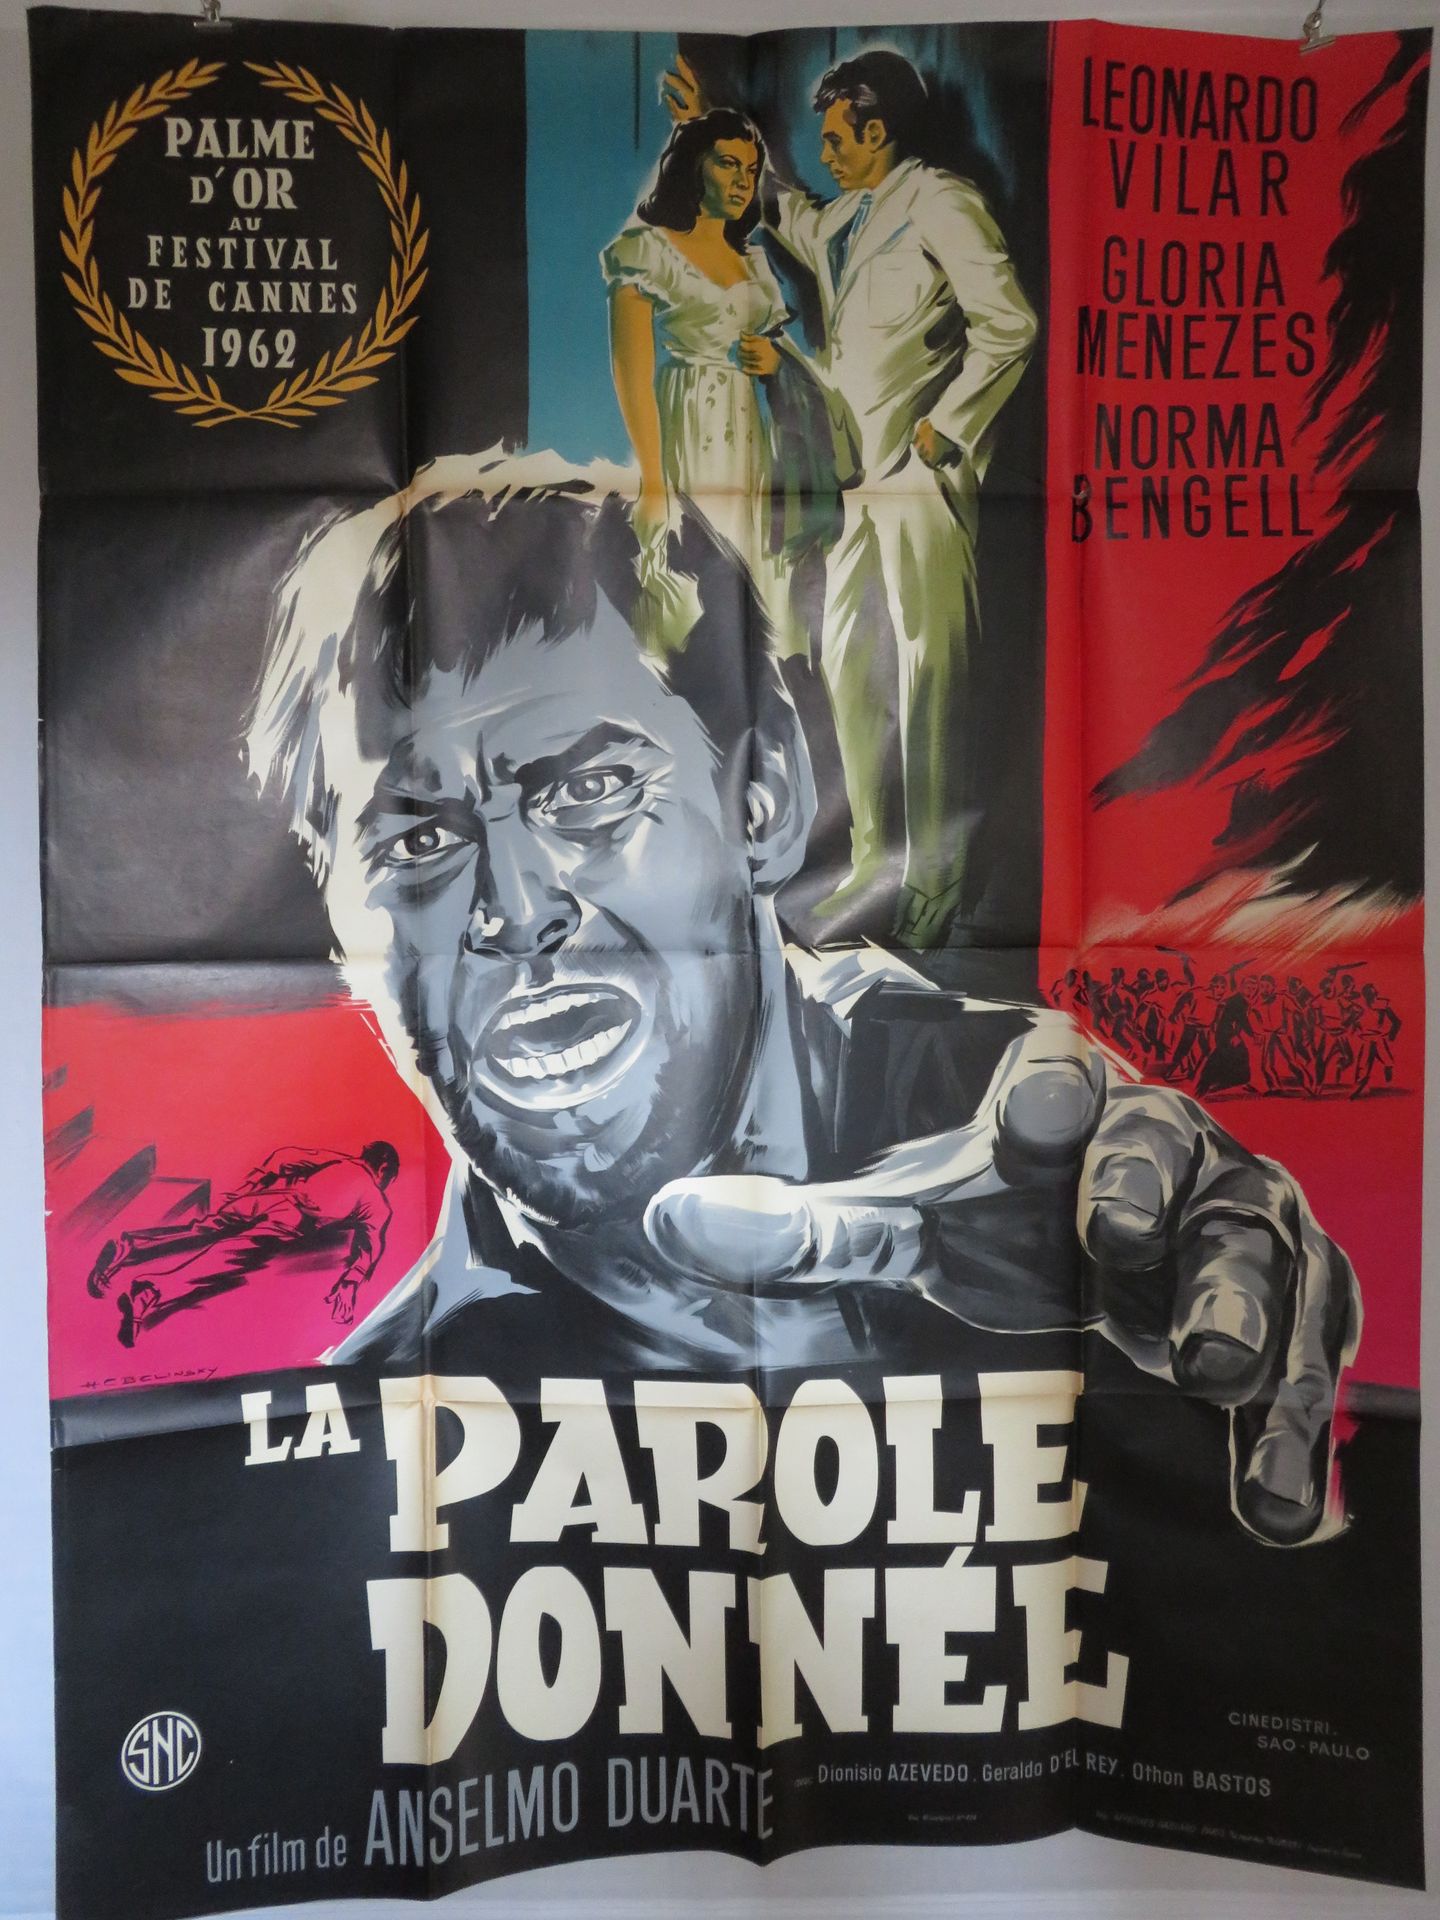 Null « LA PAROLE DONNEE » (1962) de Anselmo DUARTE avec Leonardo Vilar, Gloria M&hellip;